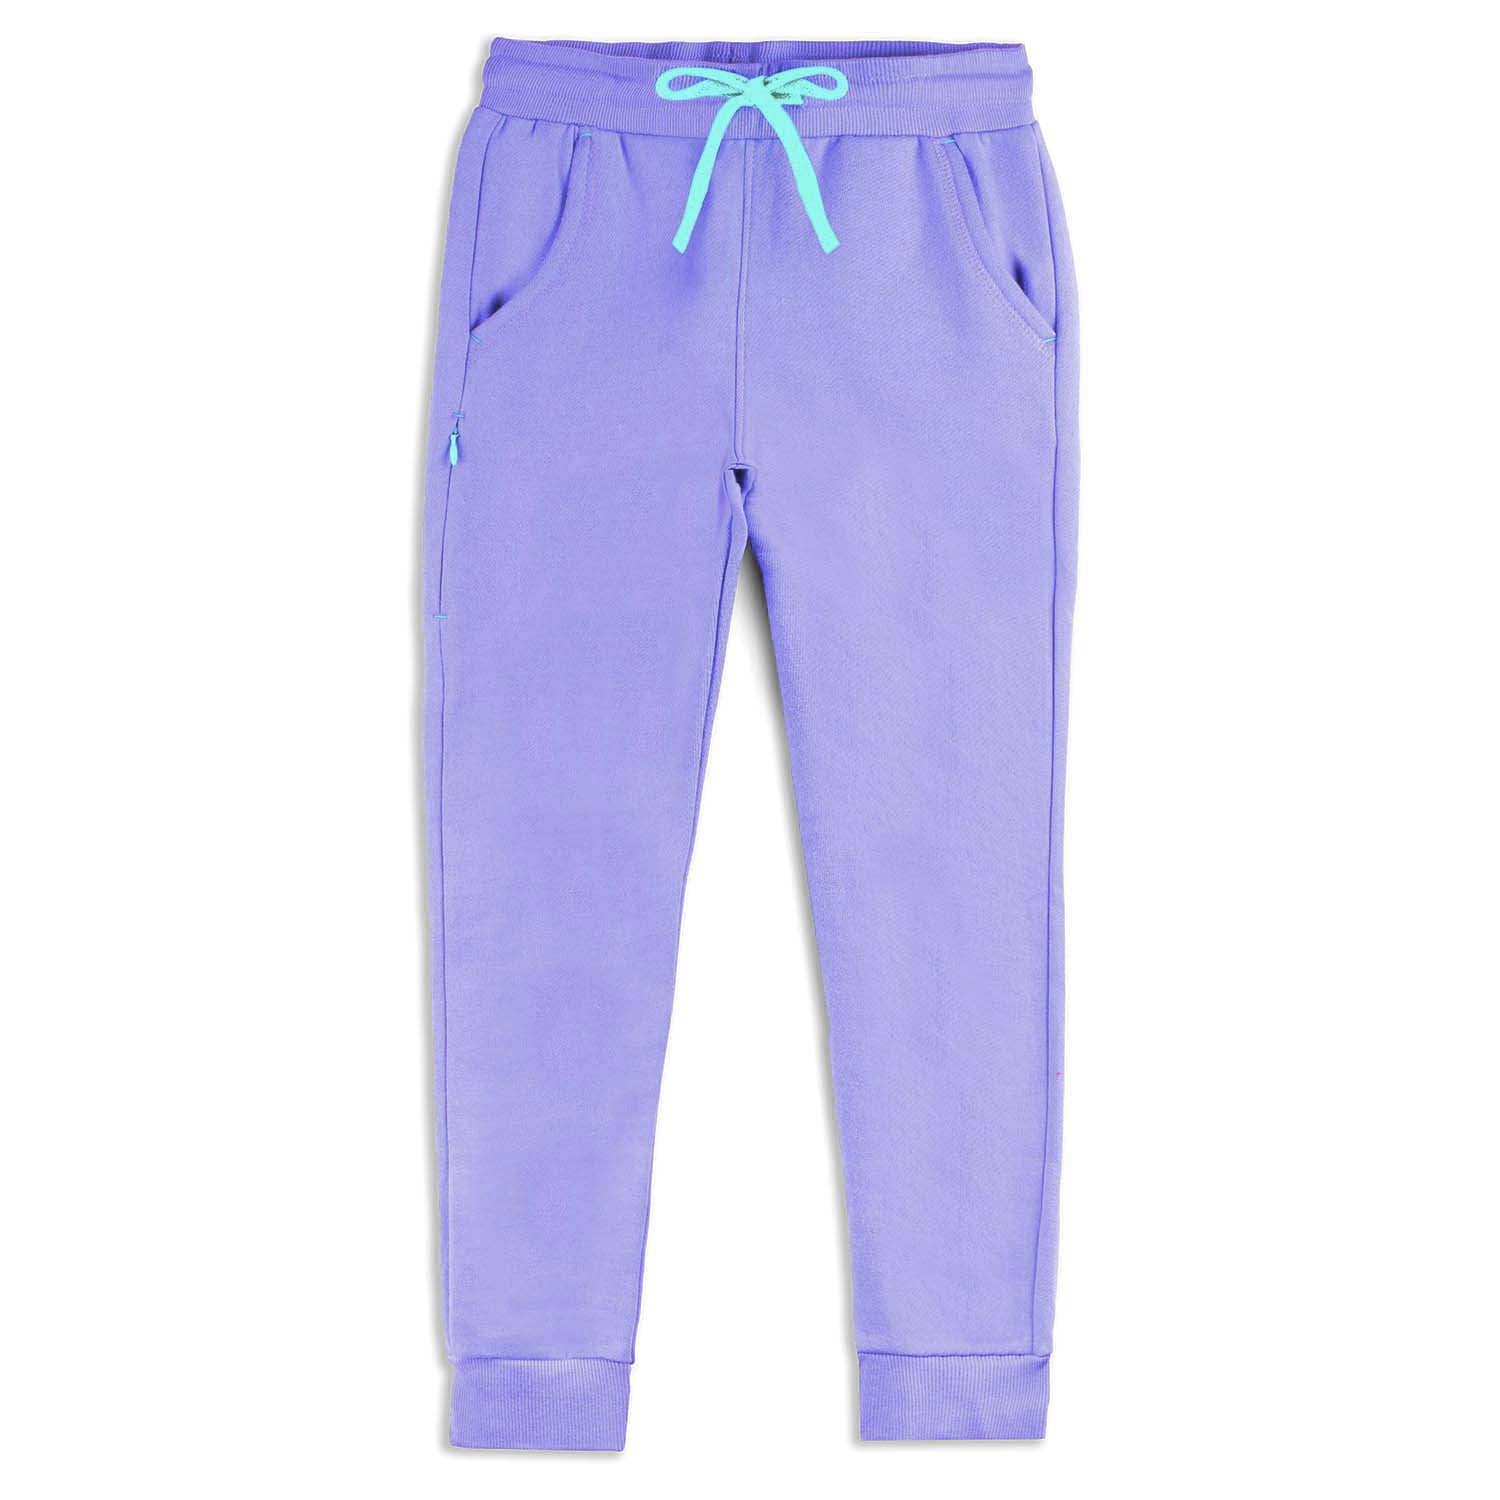 Women's Joggers Chinos Workout Pants Cotton Blend Blue Purple Dark